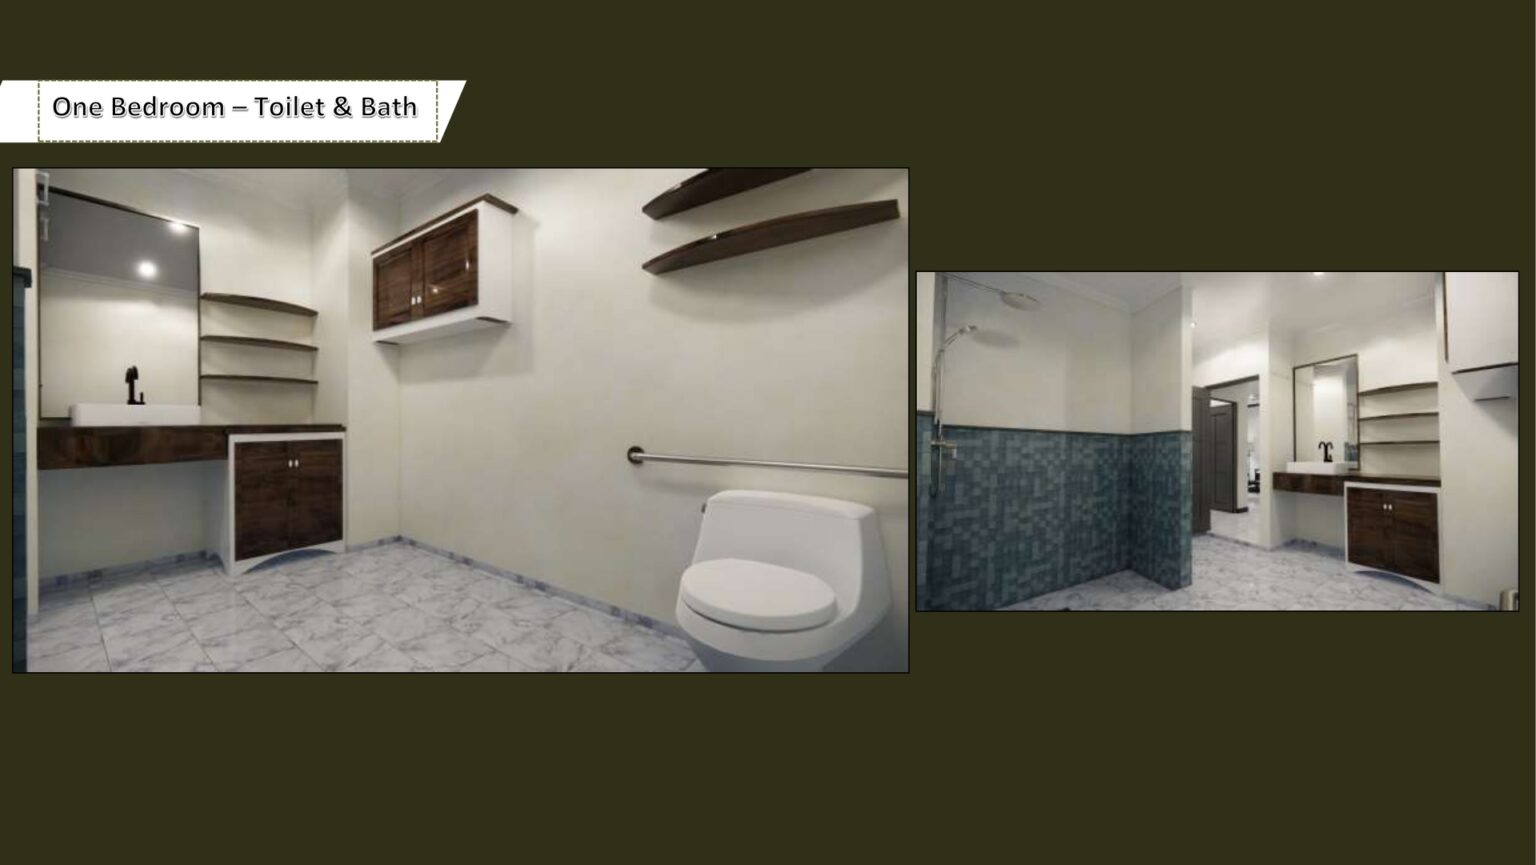 Retreat at Carrollton - one bedroom - toilet and bath